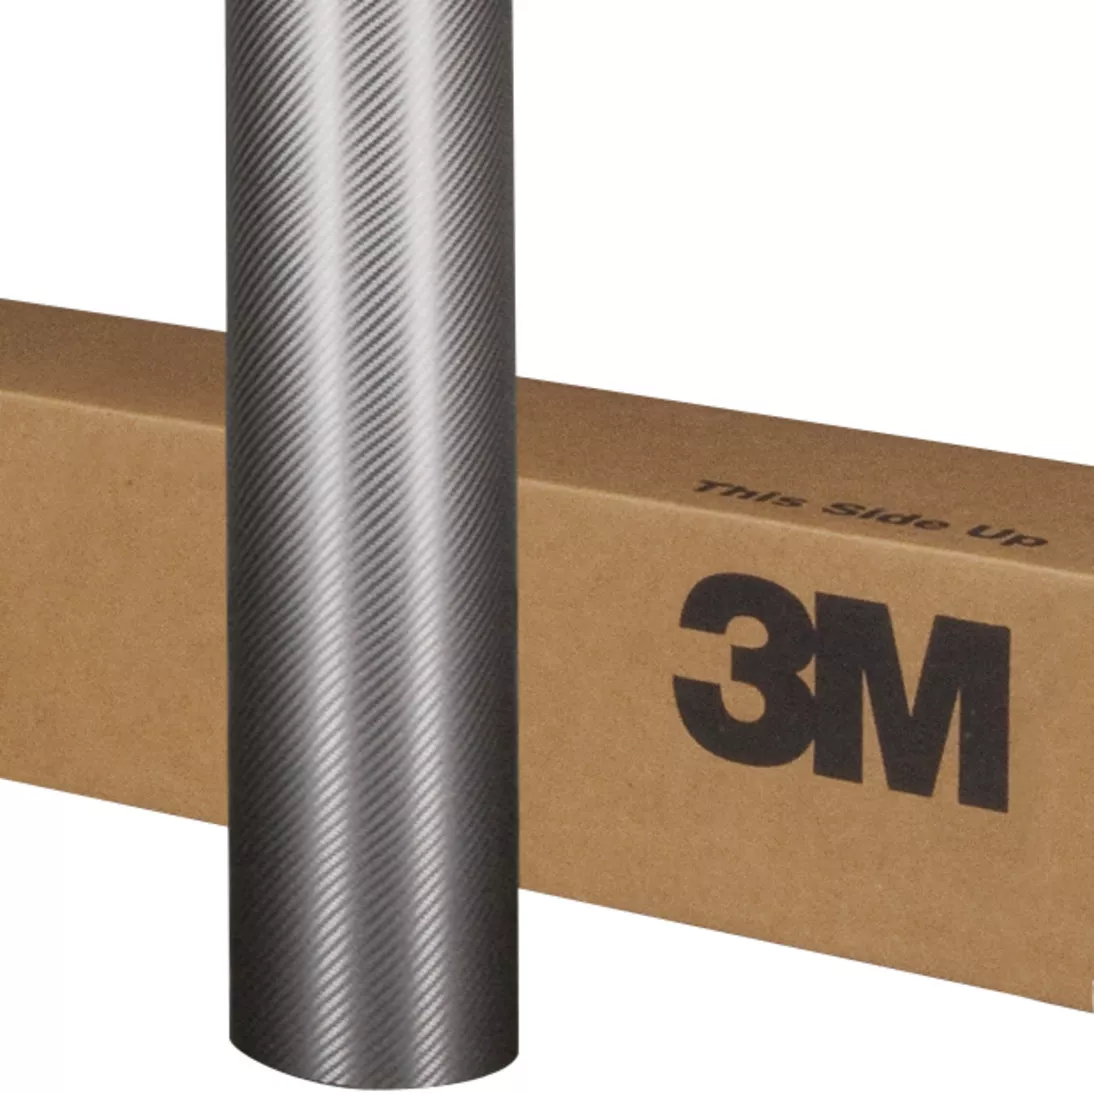 3M™ Wrap Film 2080-CFS201, Carbon Fiber Anthracite, 60 in x 25 yd